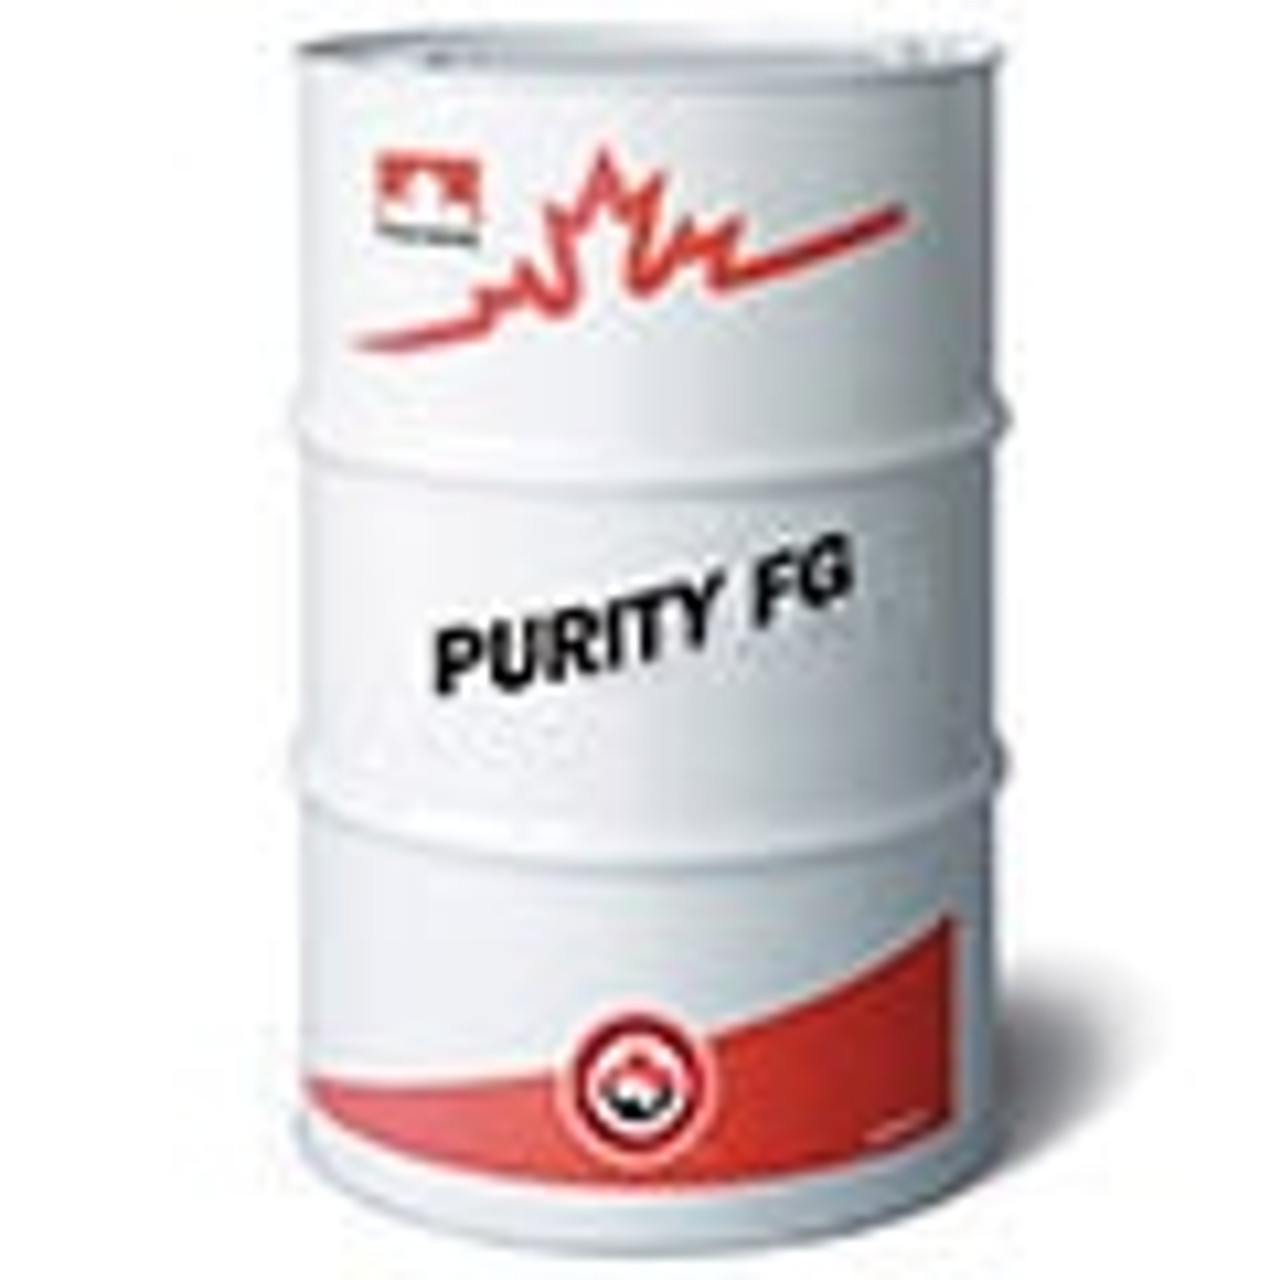 Petro-Canada America Lubricants C FG EP 220